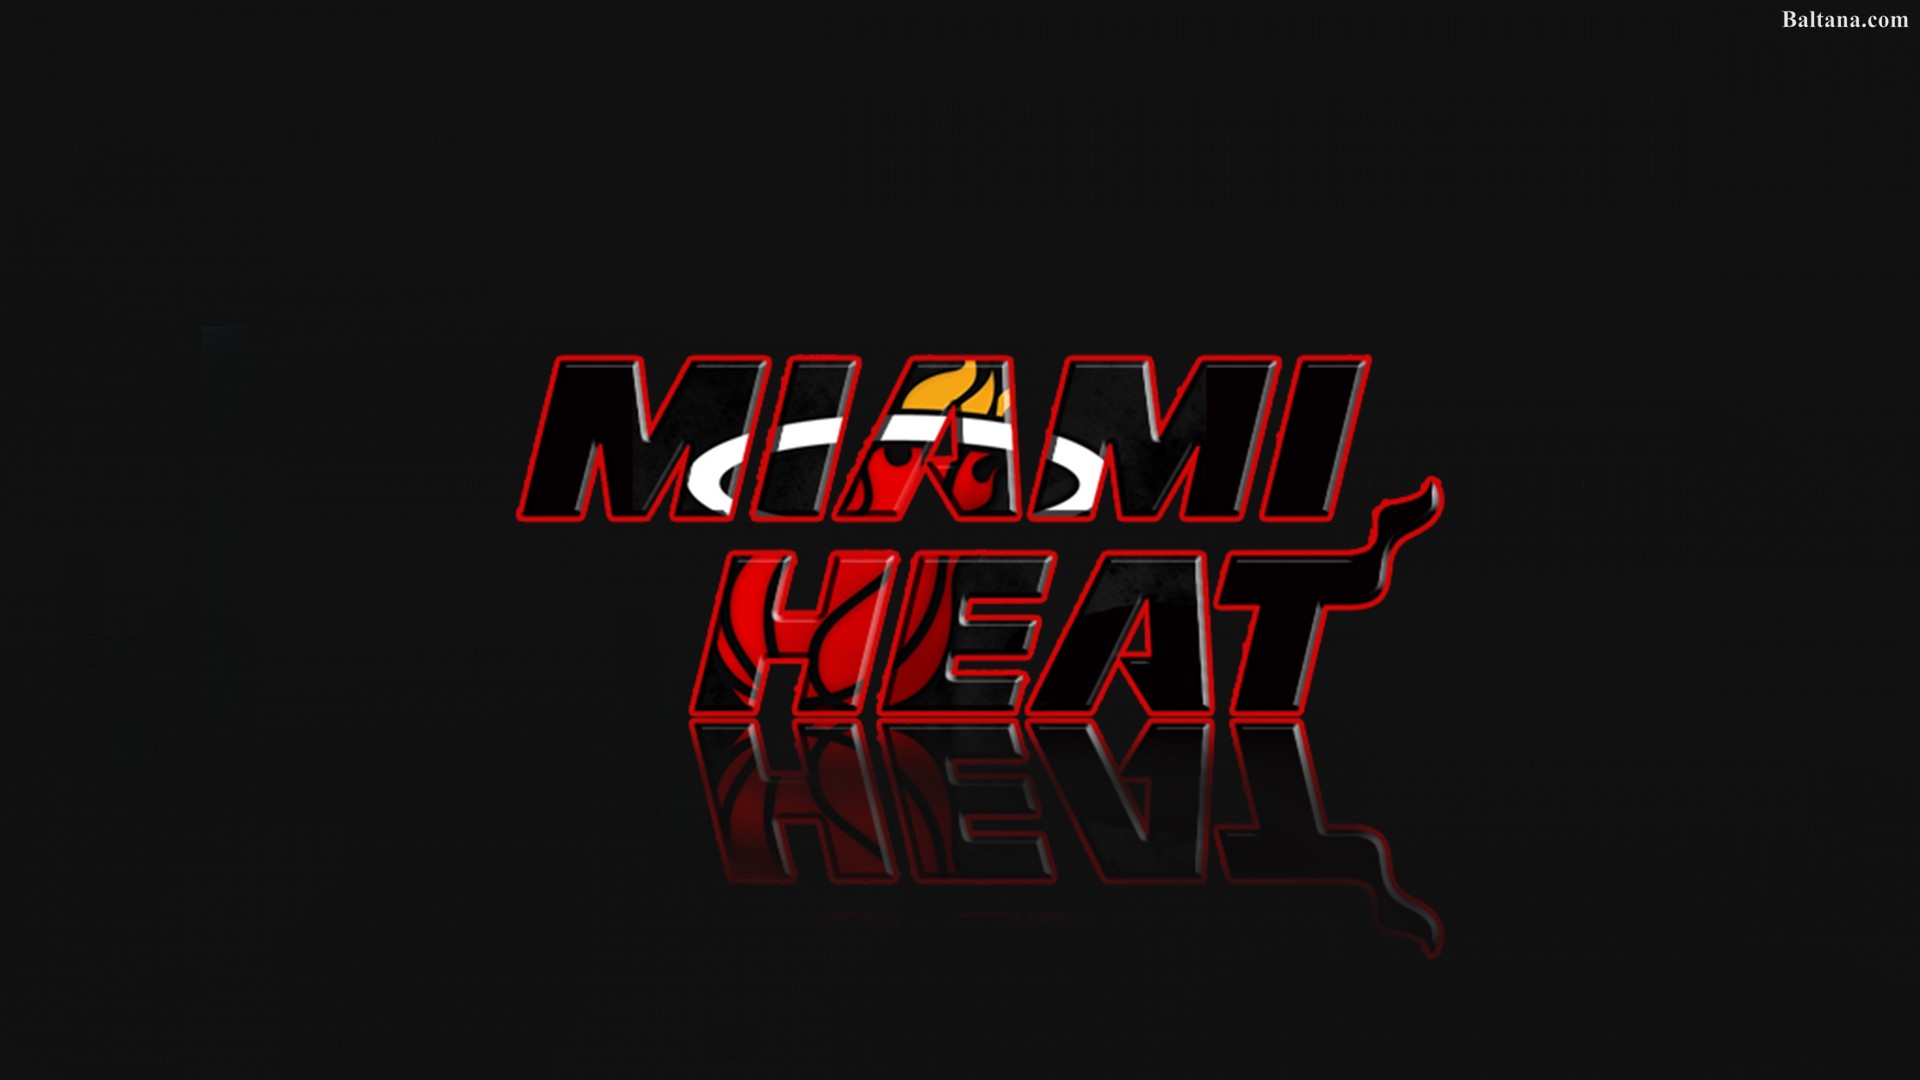 Miami Heat HD Desktop Wallpaper Baltana